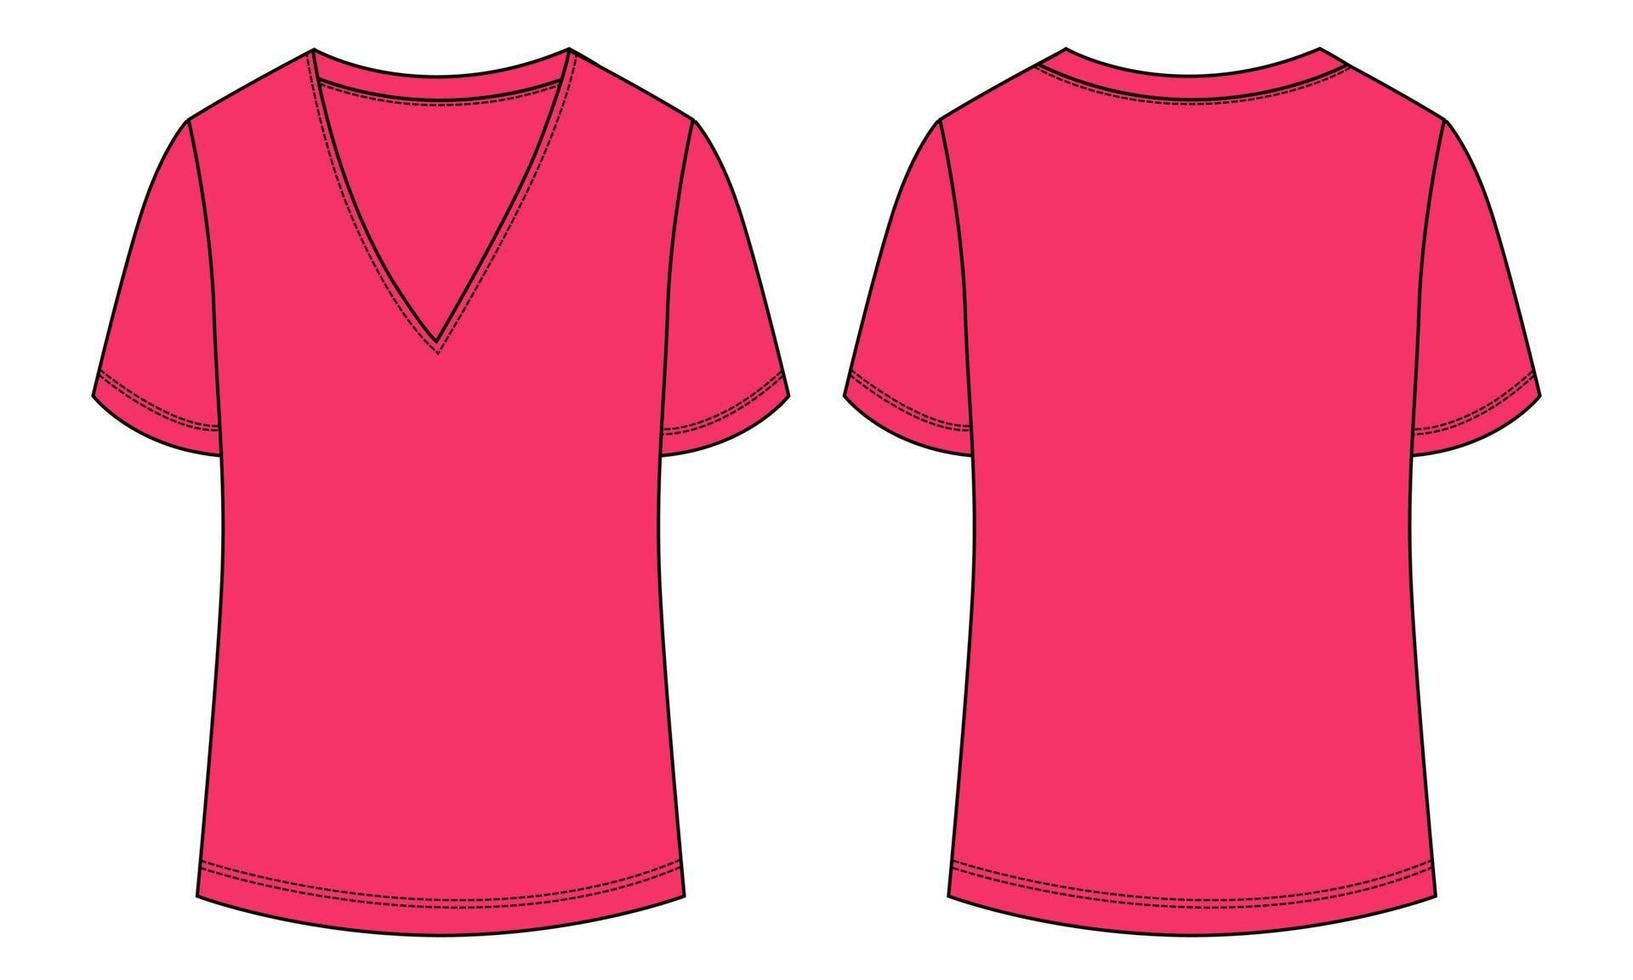 V Neck T shirt Technical fashion flat sketch vector illustration pink color template for ladies